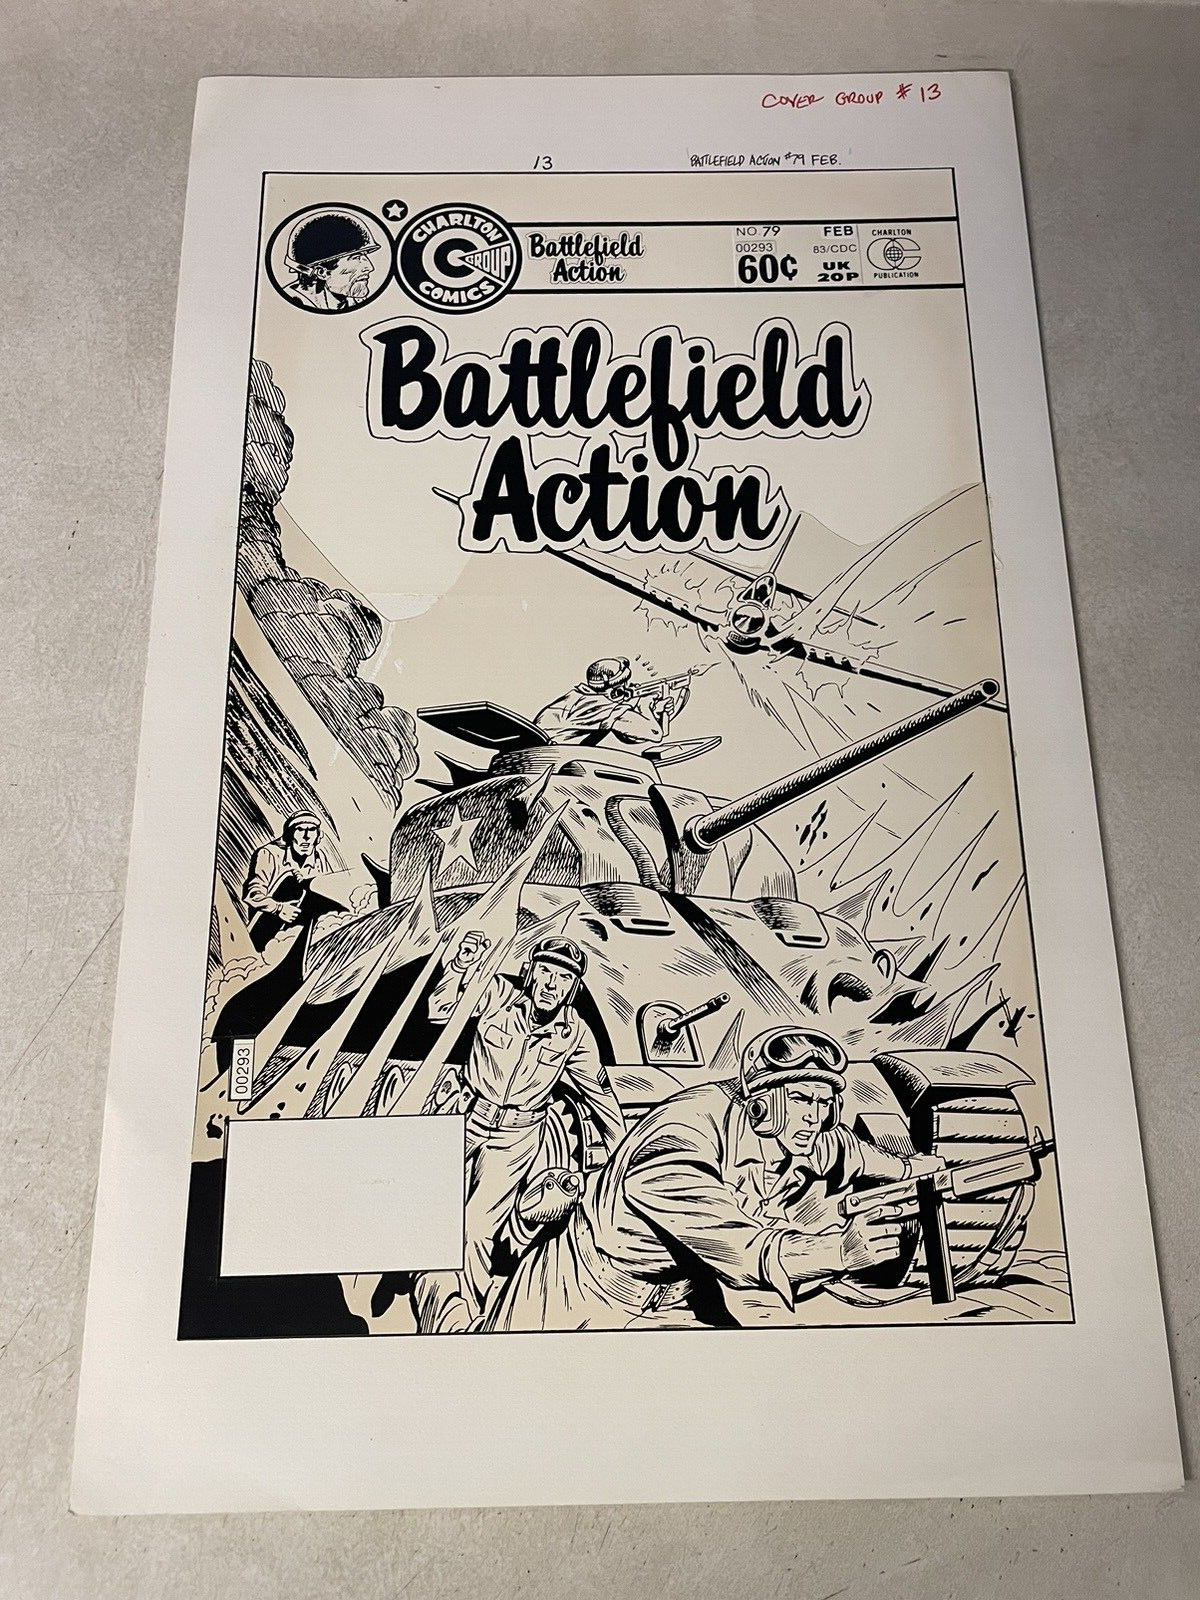 BATTLEFIELD ACTION #79 COVER prod stat ART 1983 GIORDANO WAR TANK SHOOTS PLANE